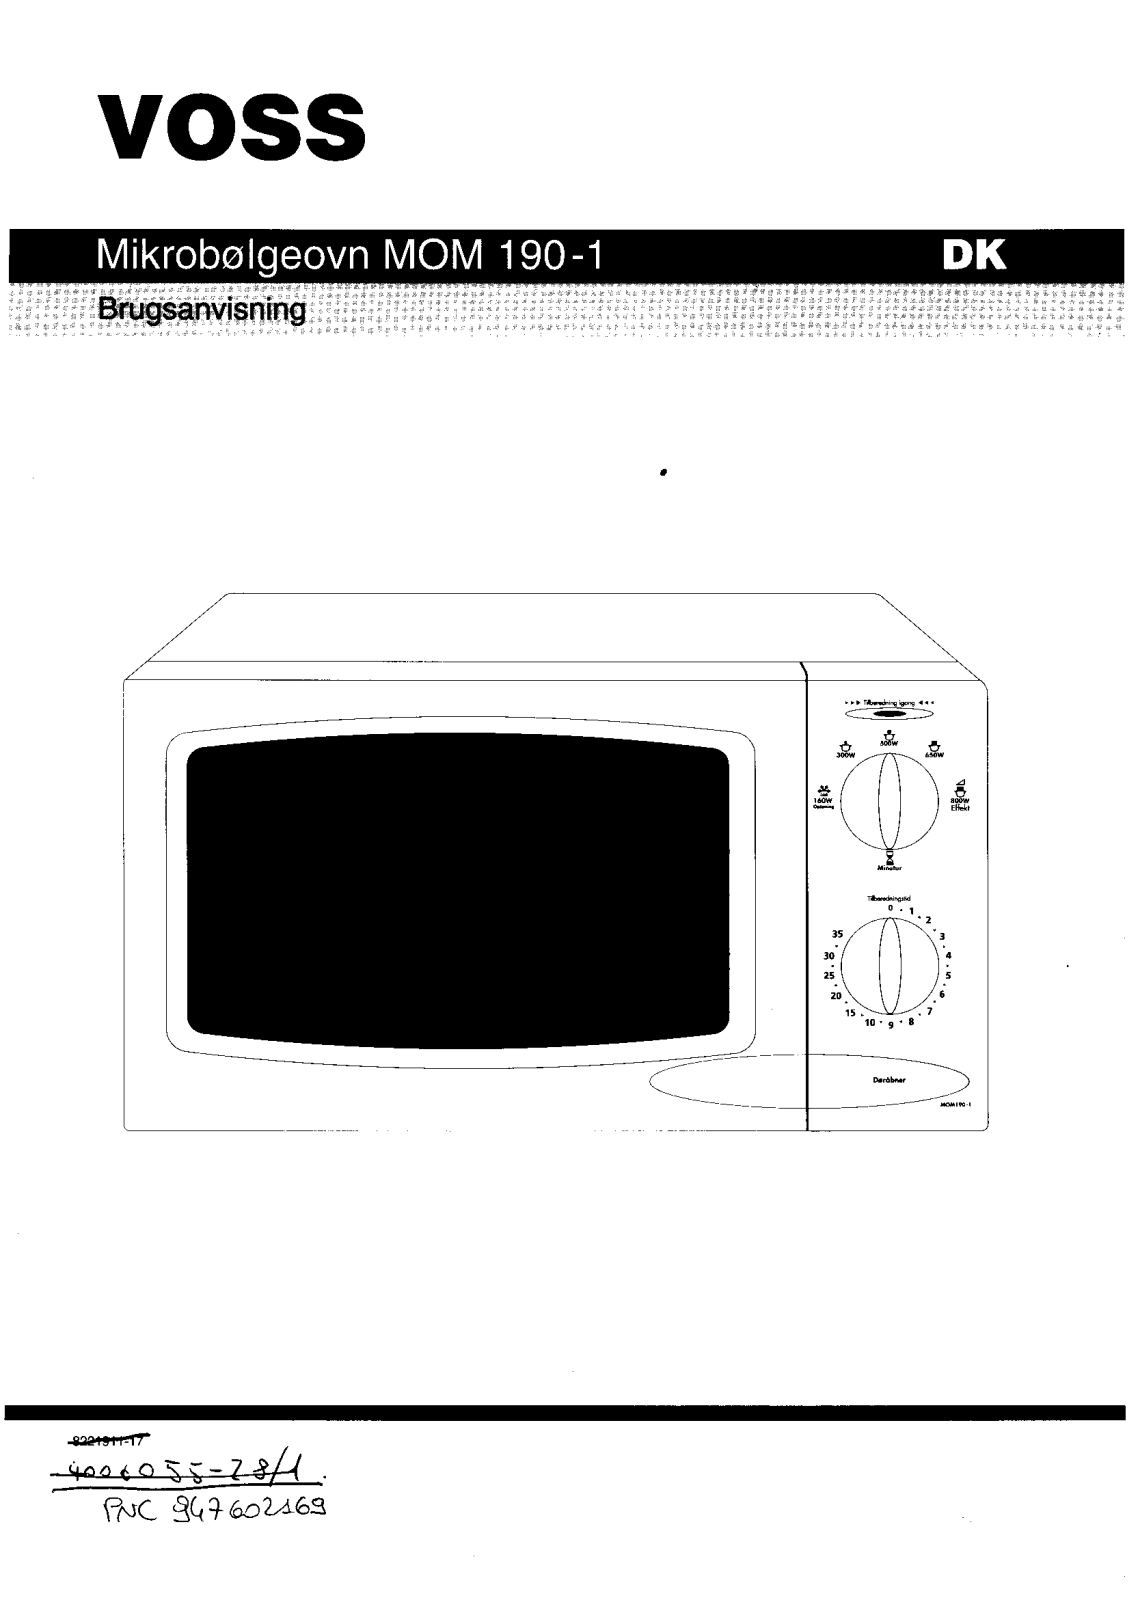 Voss MOM190-1 User Manual